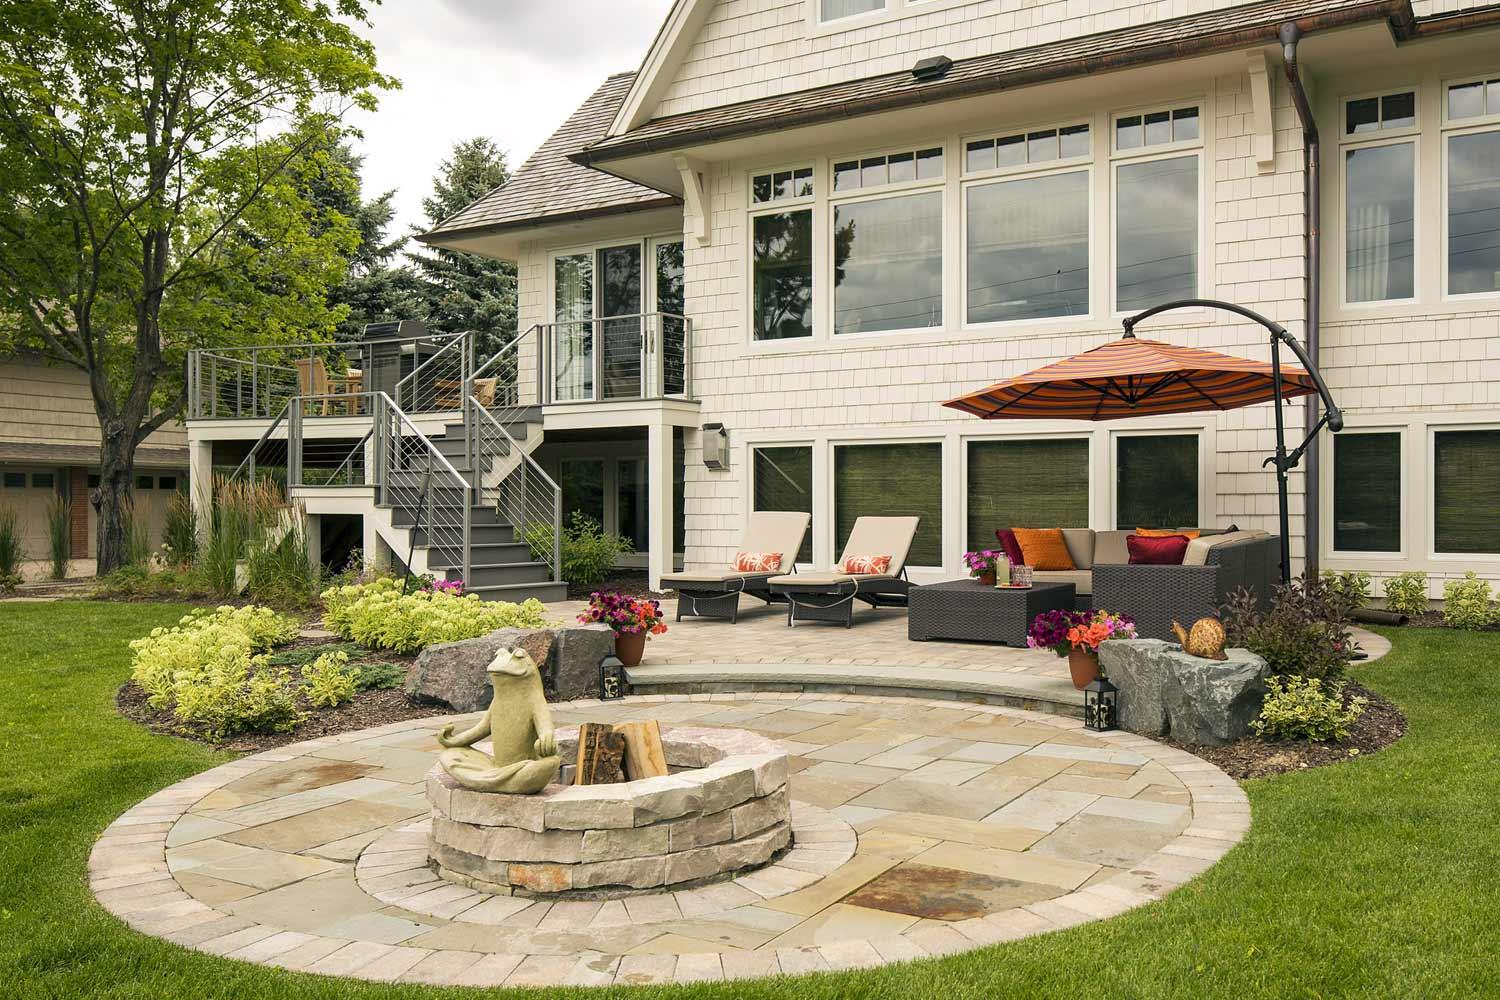 Circular backyard paver patios with a fire circle and meditating frog